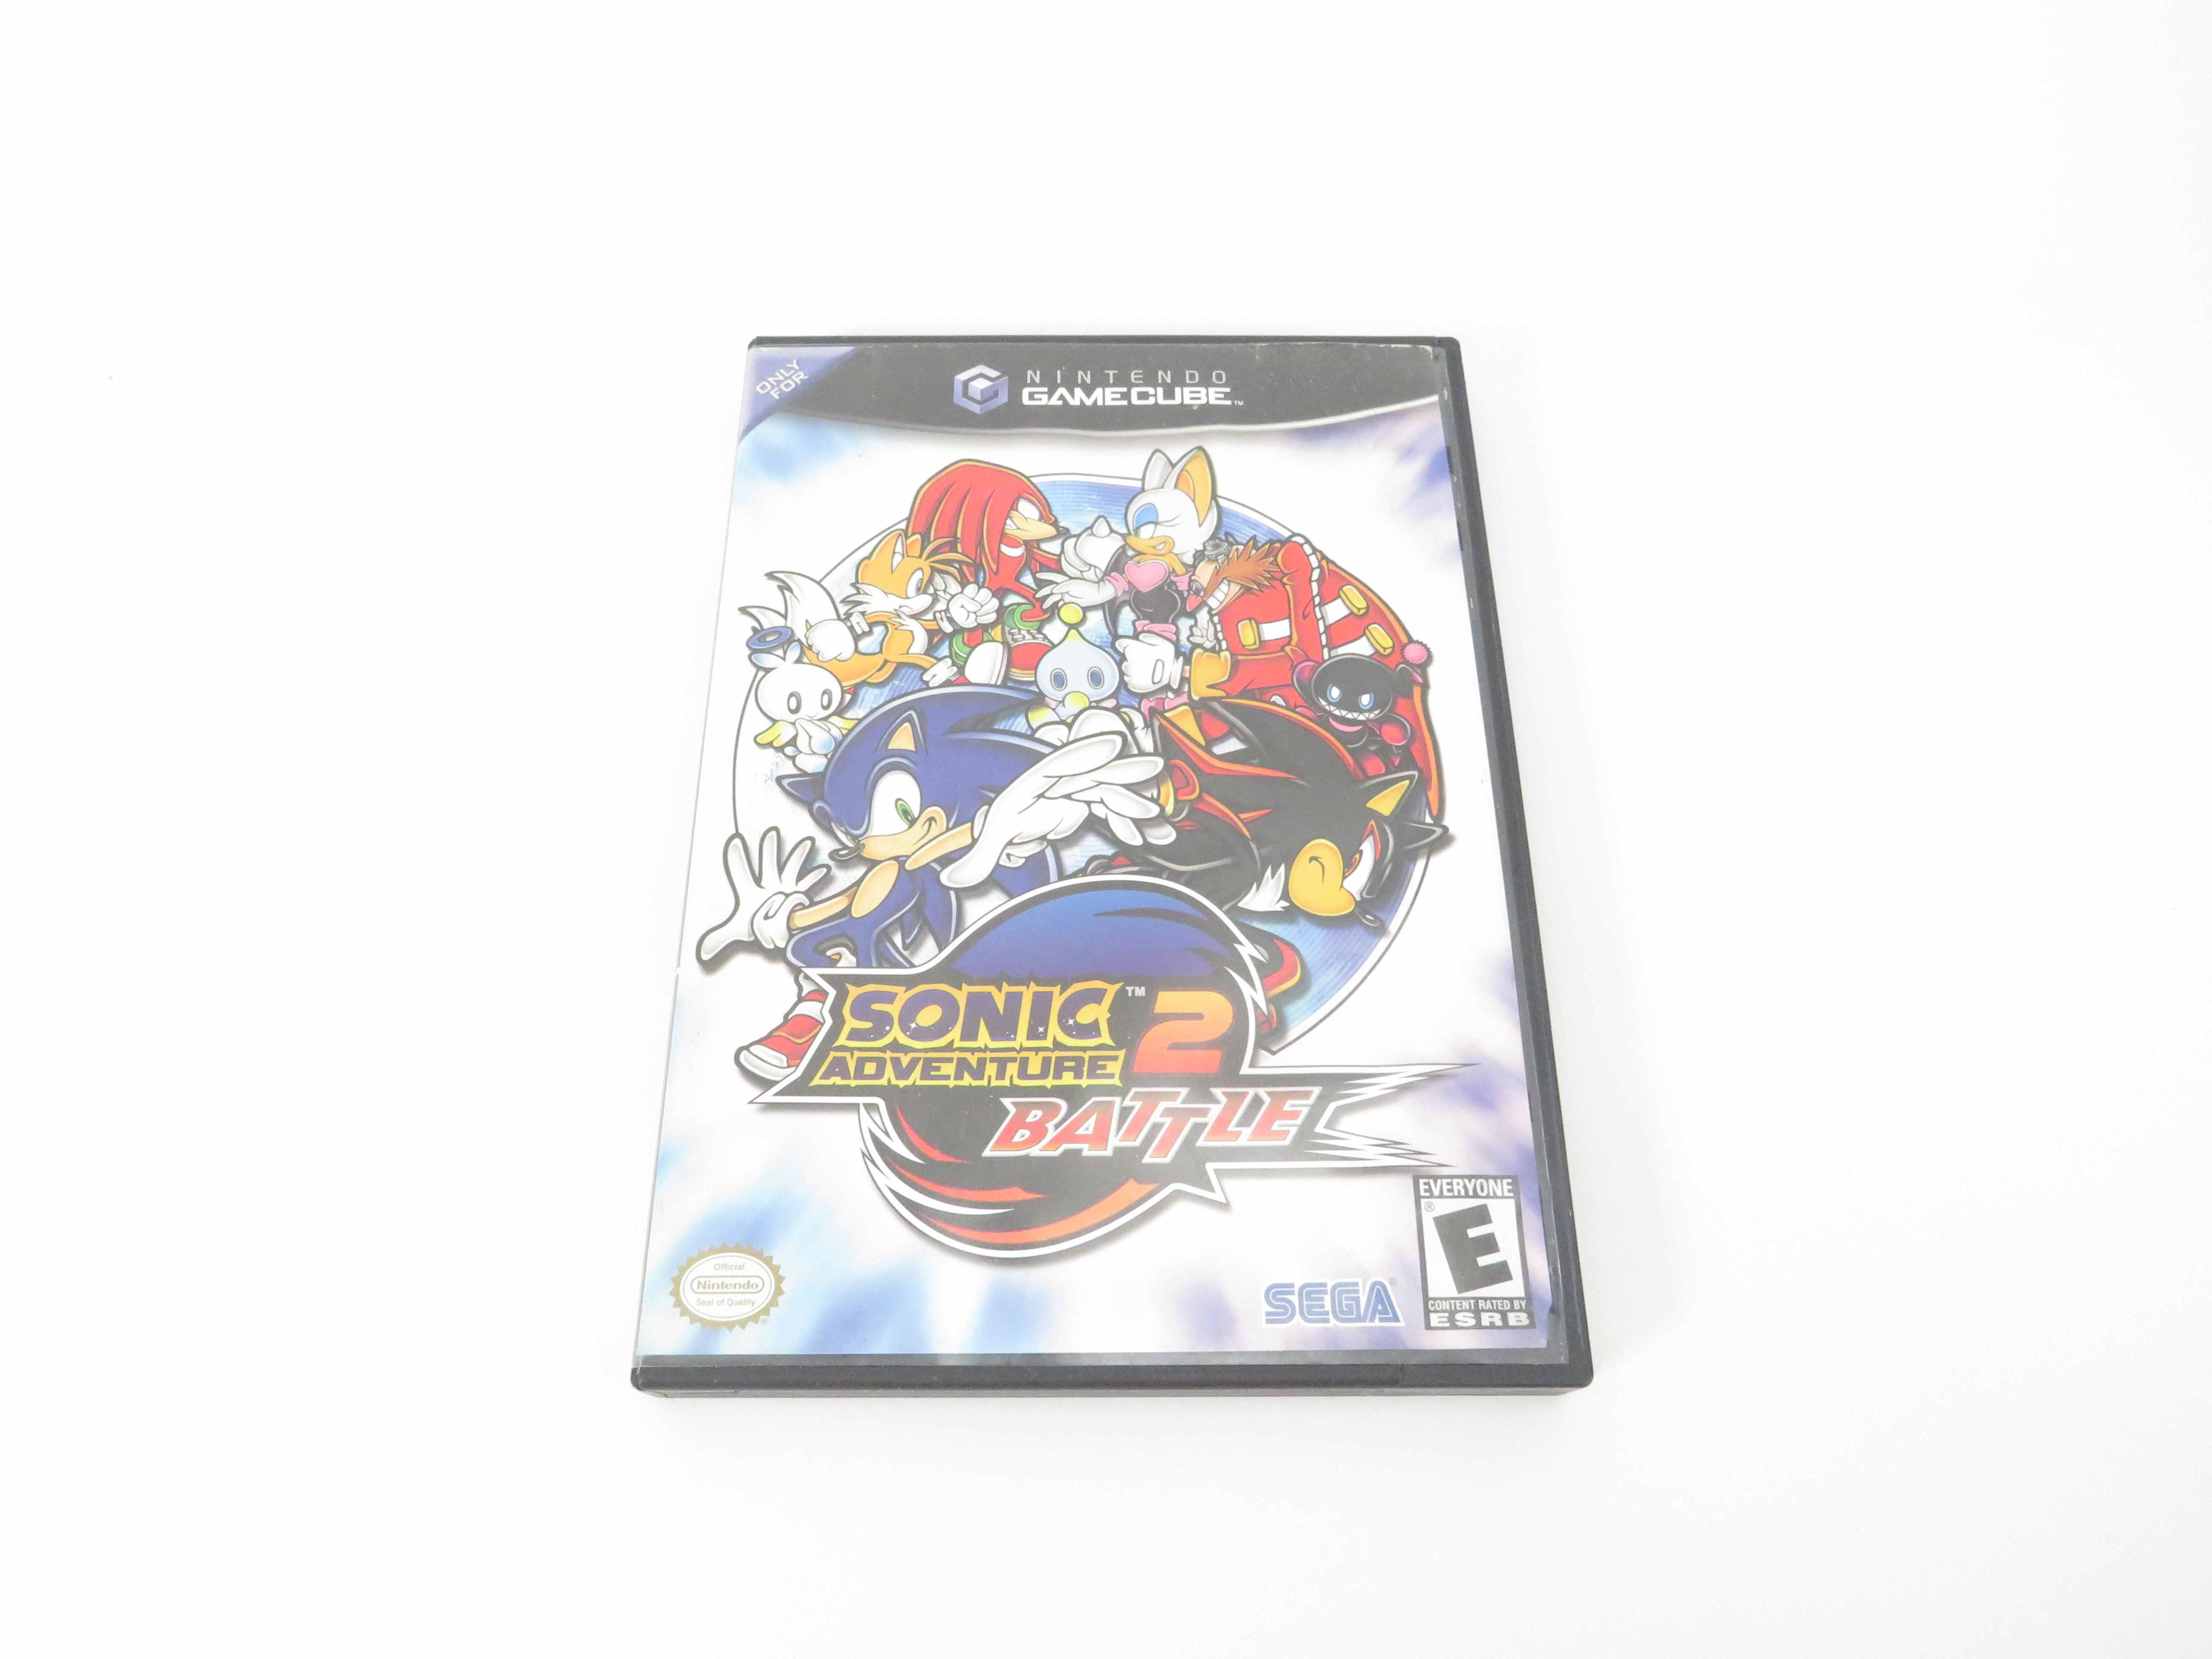 Manual Only) Sonic Adventure 2 Battle Nintendo Gamecube Authentic